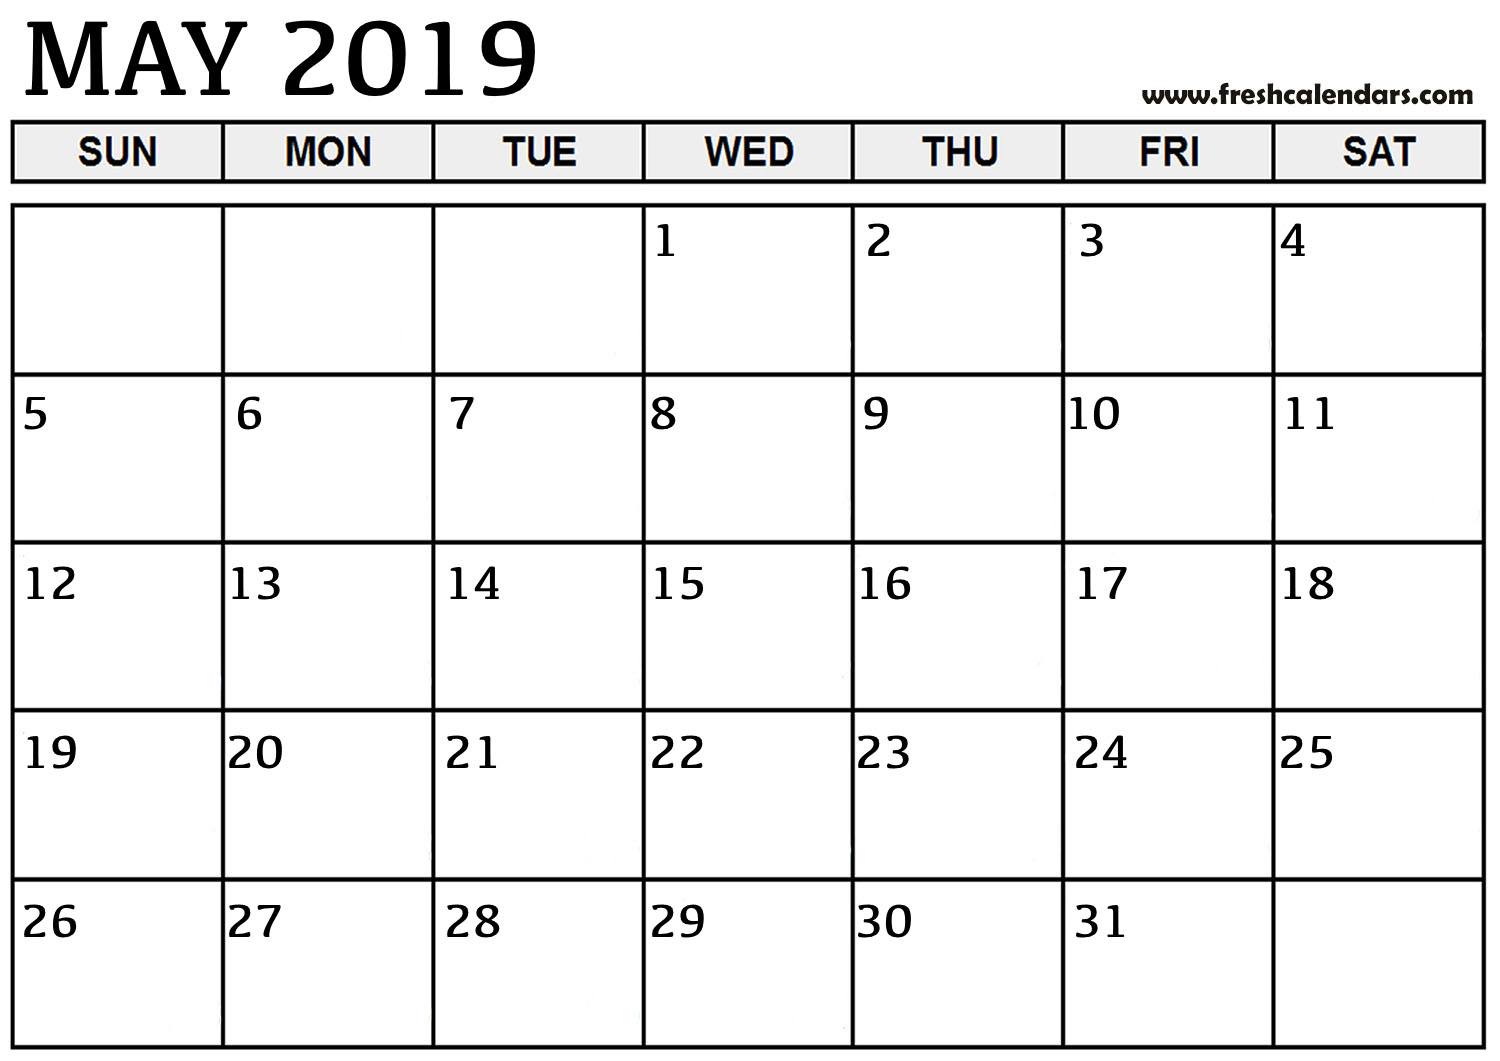 may-2019-calendar-with-holidays-printable-2019-calendar-calendar-printables-monthly-calendar